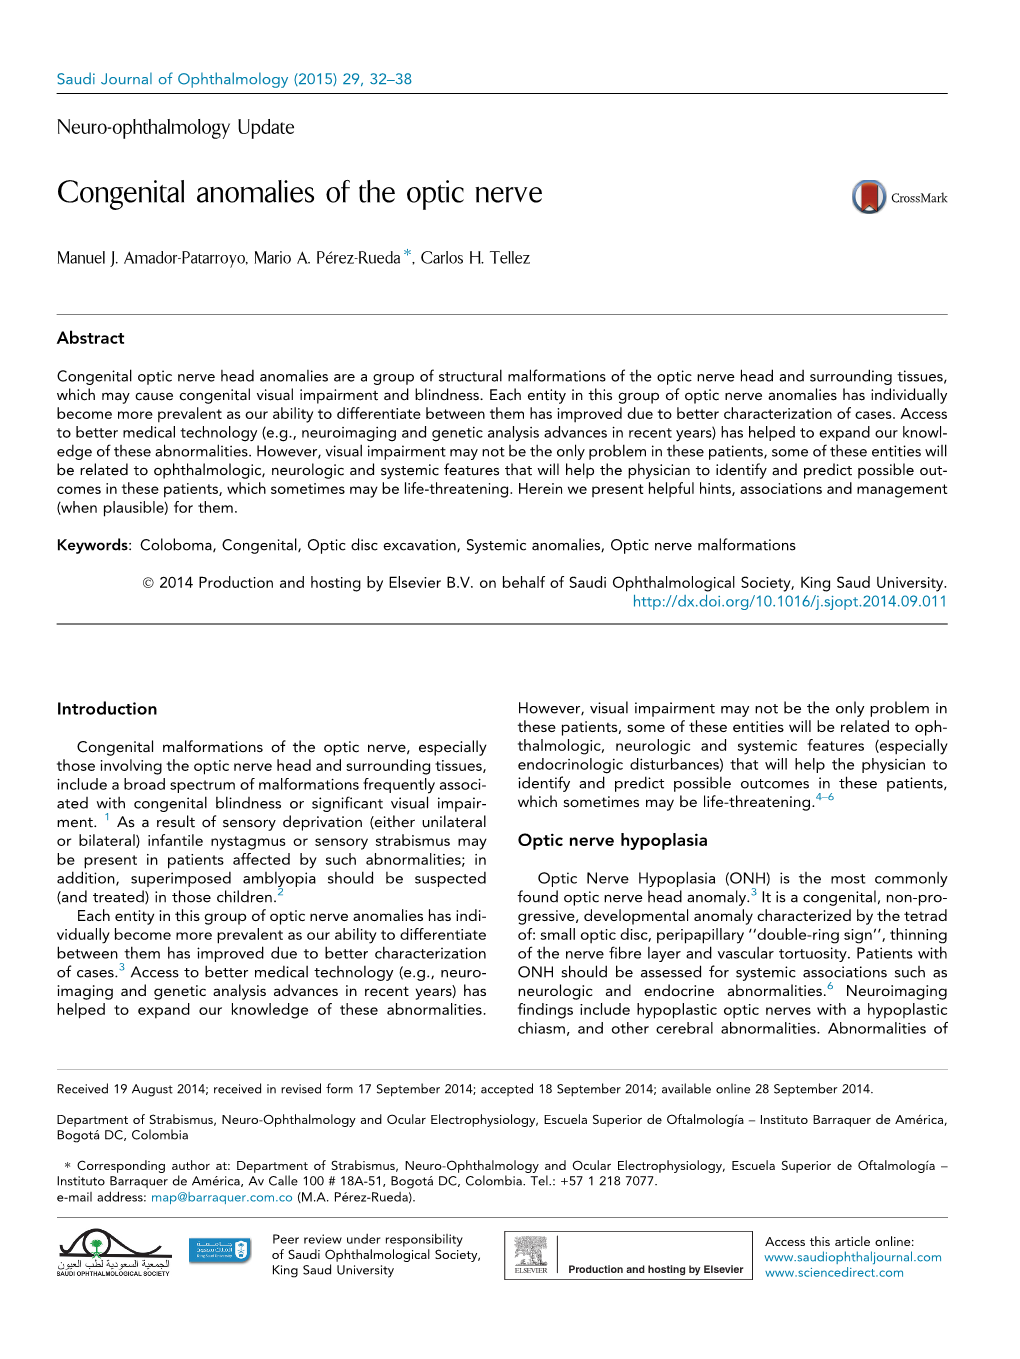 Congenital Anomalies of the Optic Nerve